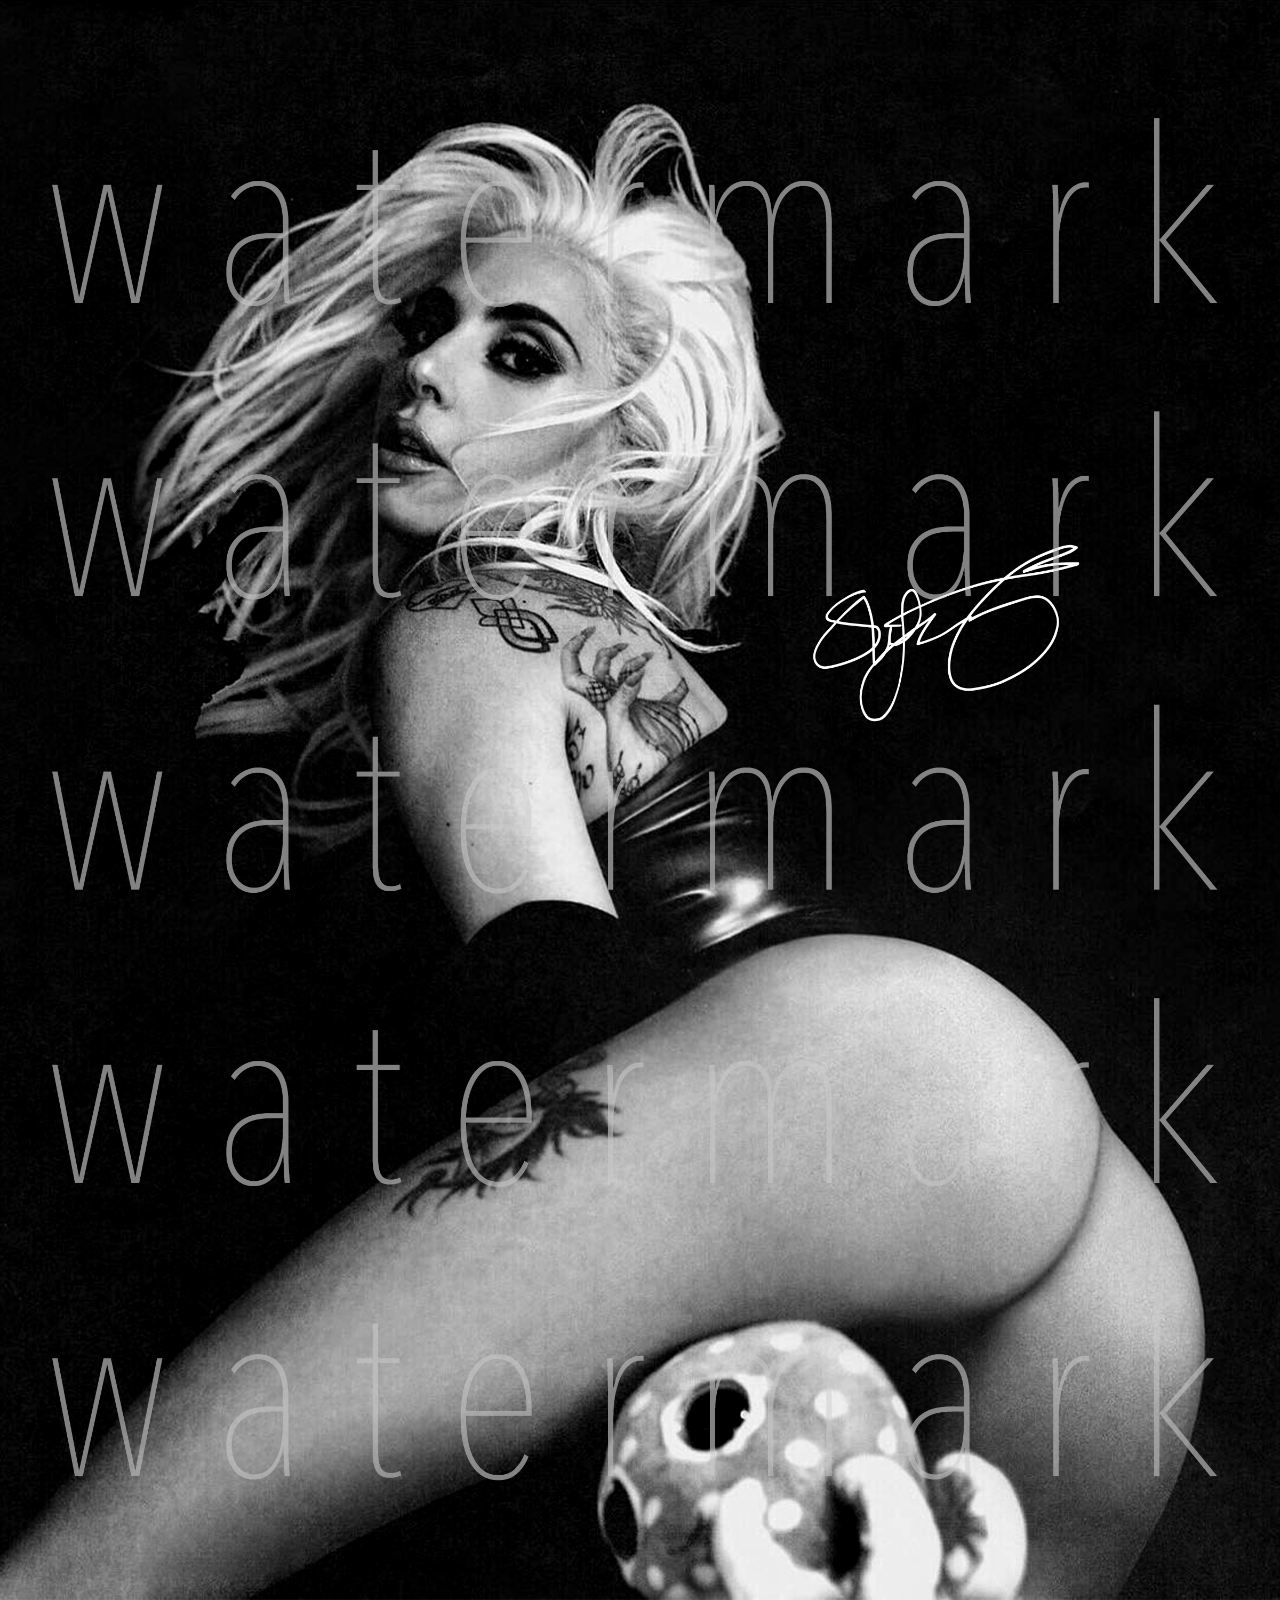 Lady Gaga Nude Photos no gotoki